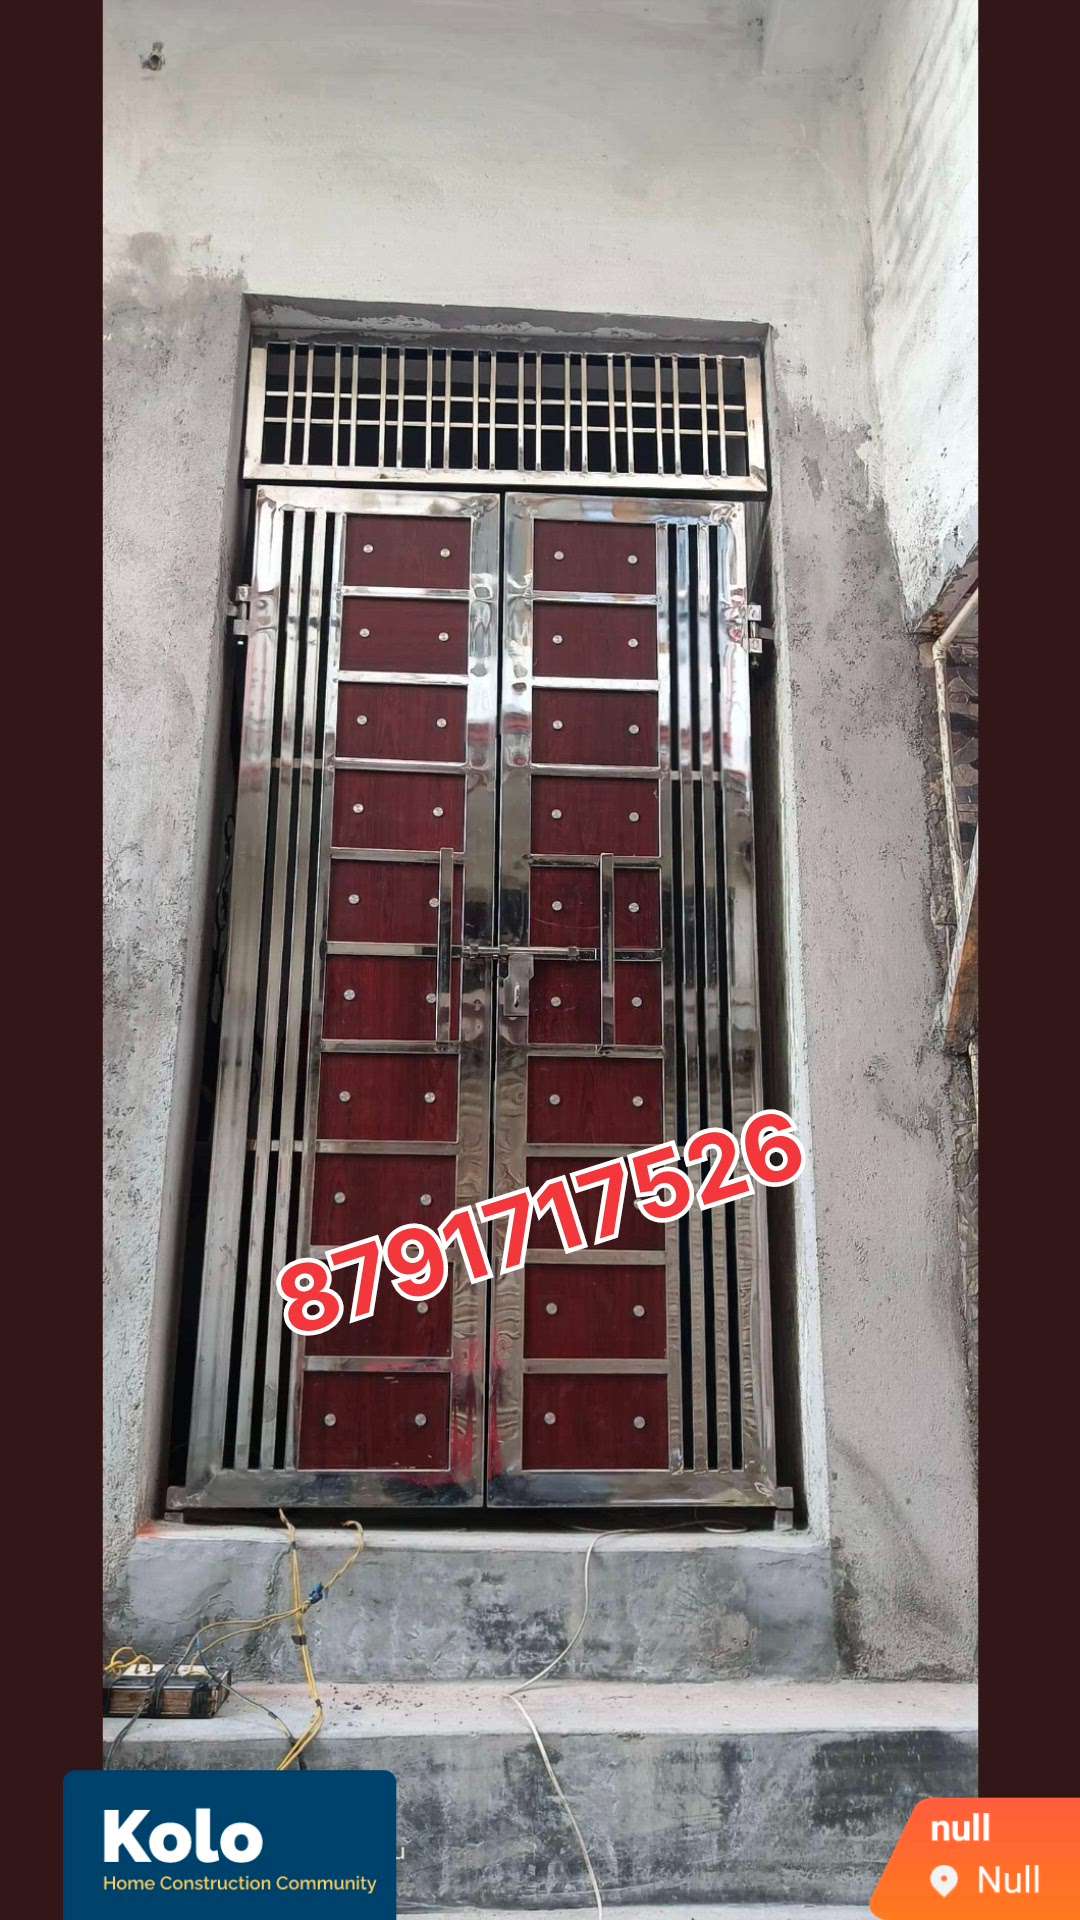 steel gate steel door #8791717526 
#steelrelling   #steelgate